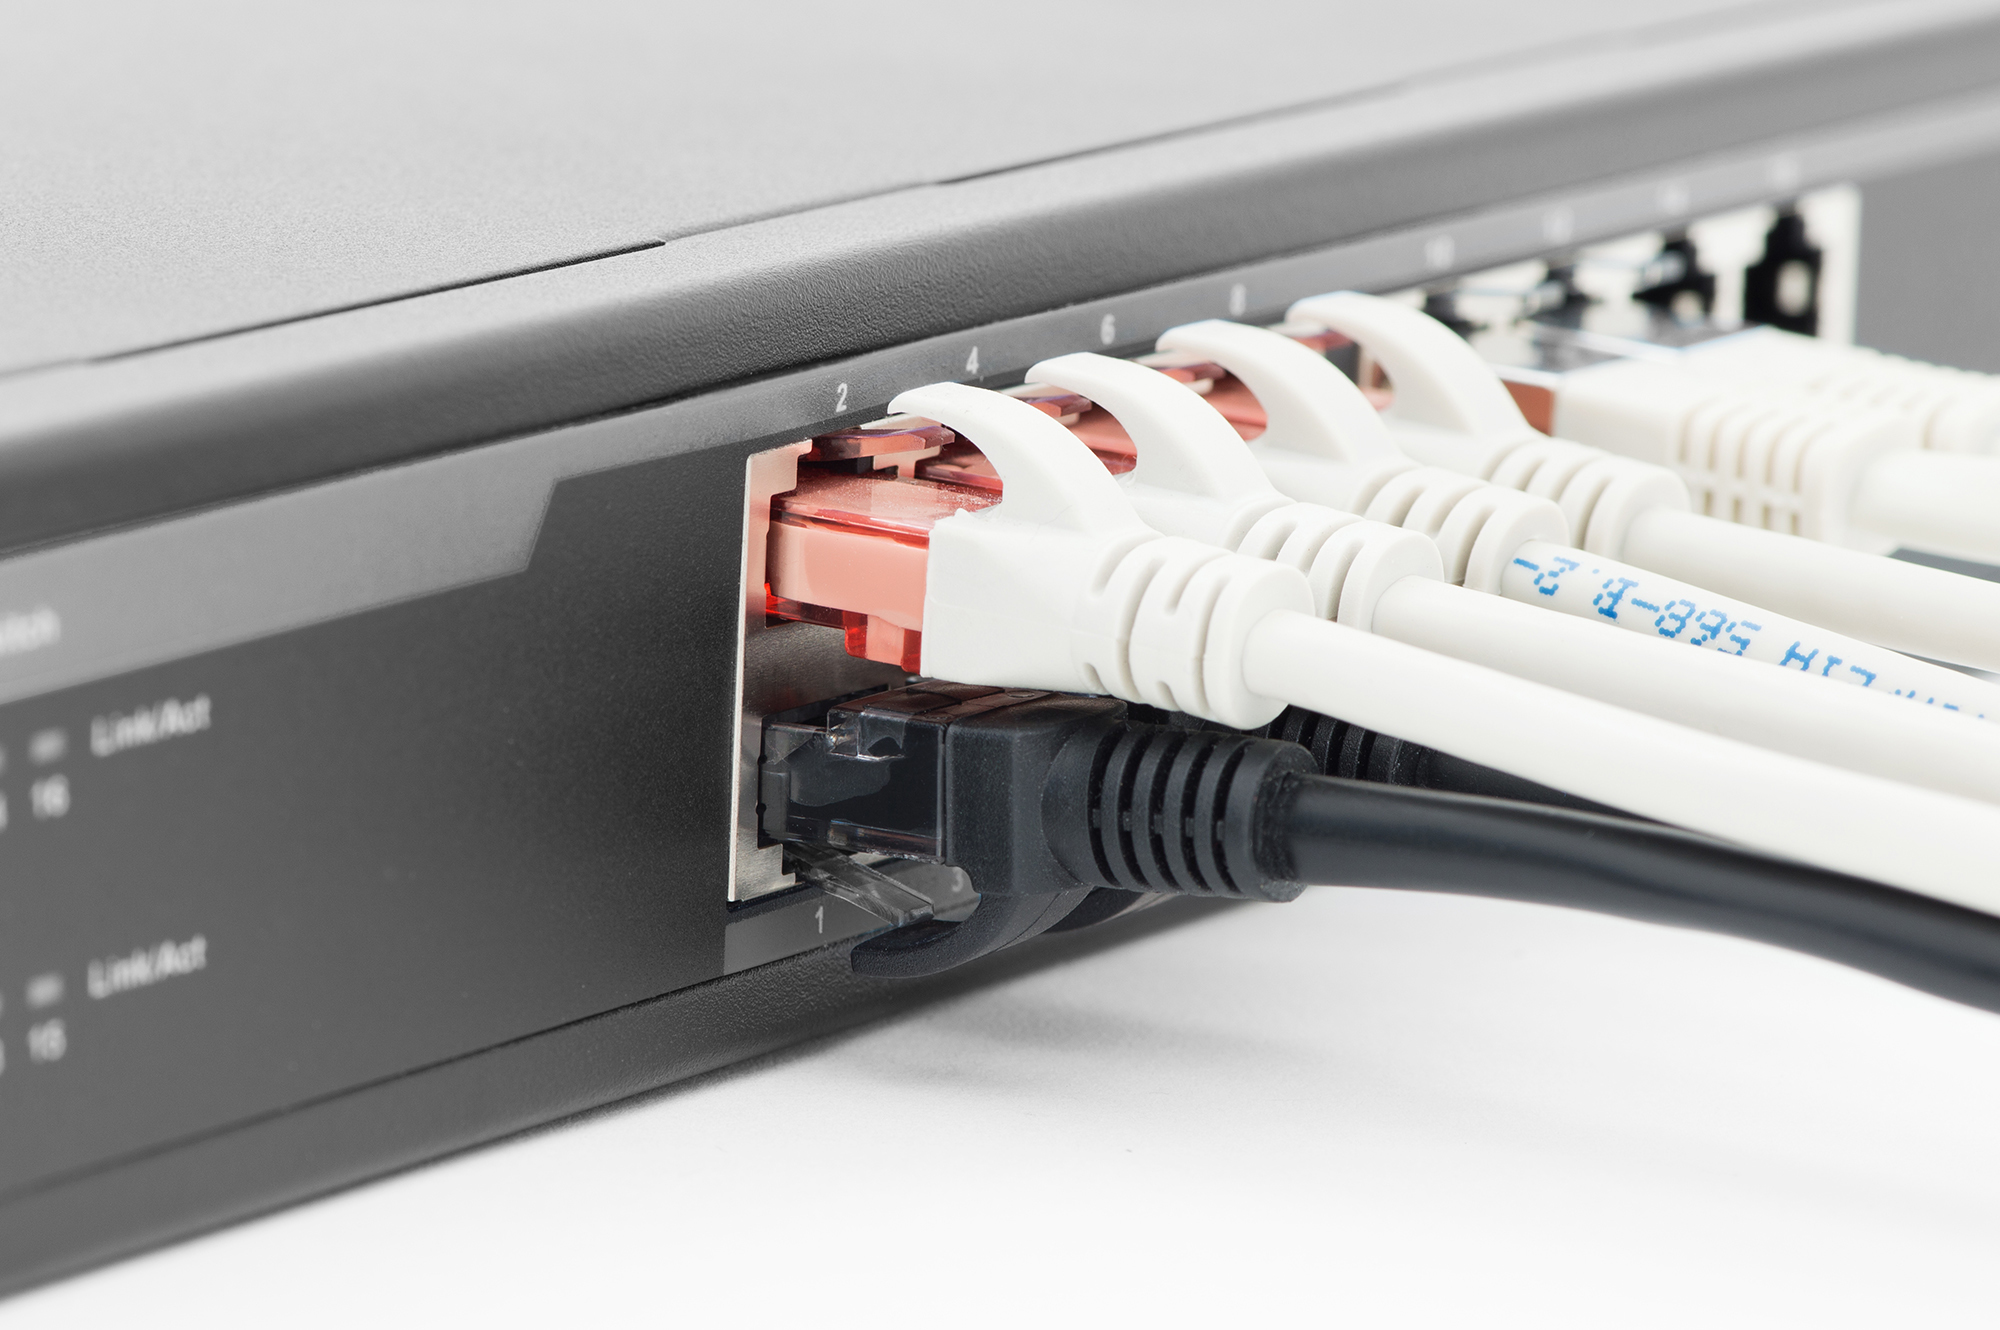 Switch Gigabit Ethernet 8 ports rackable 10 - DIGITUS